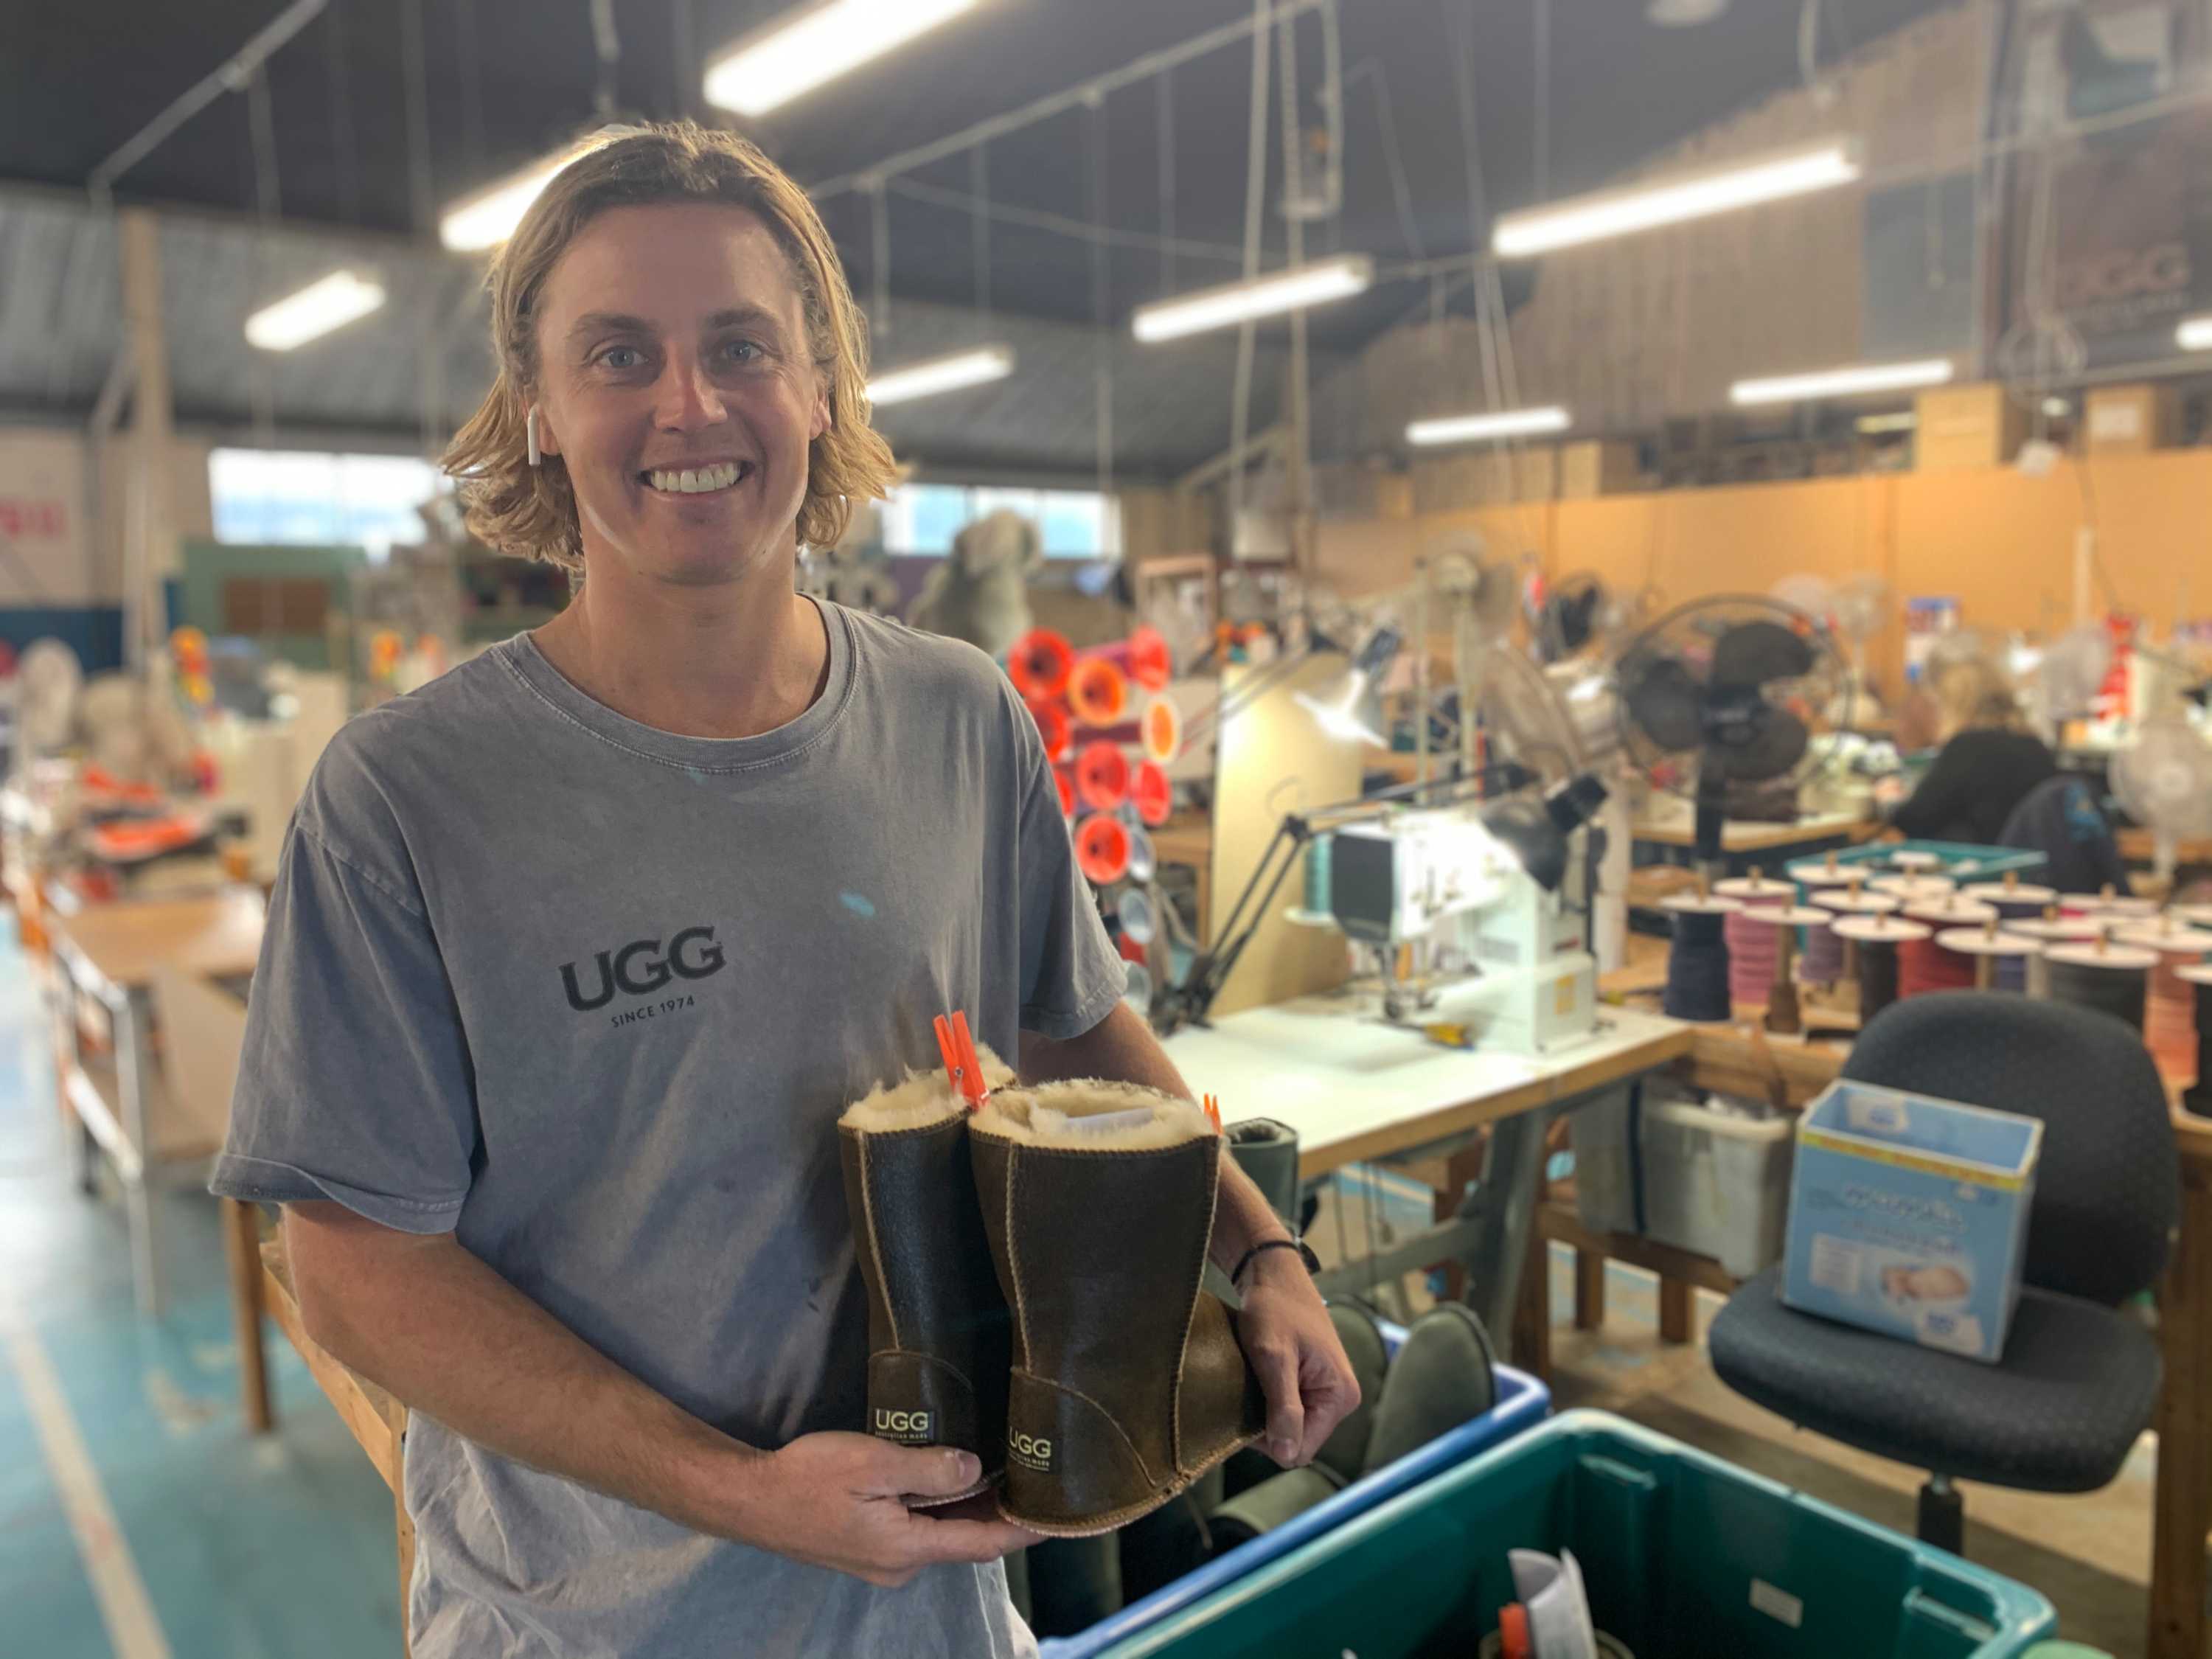 Gold Coast ugg boot maker says COVID-19 